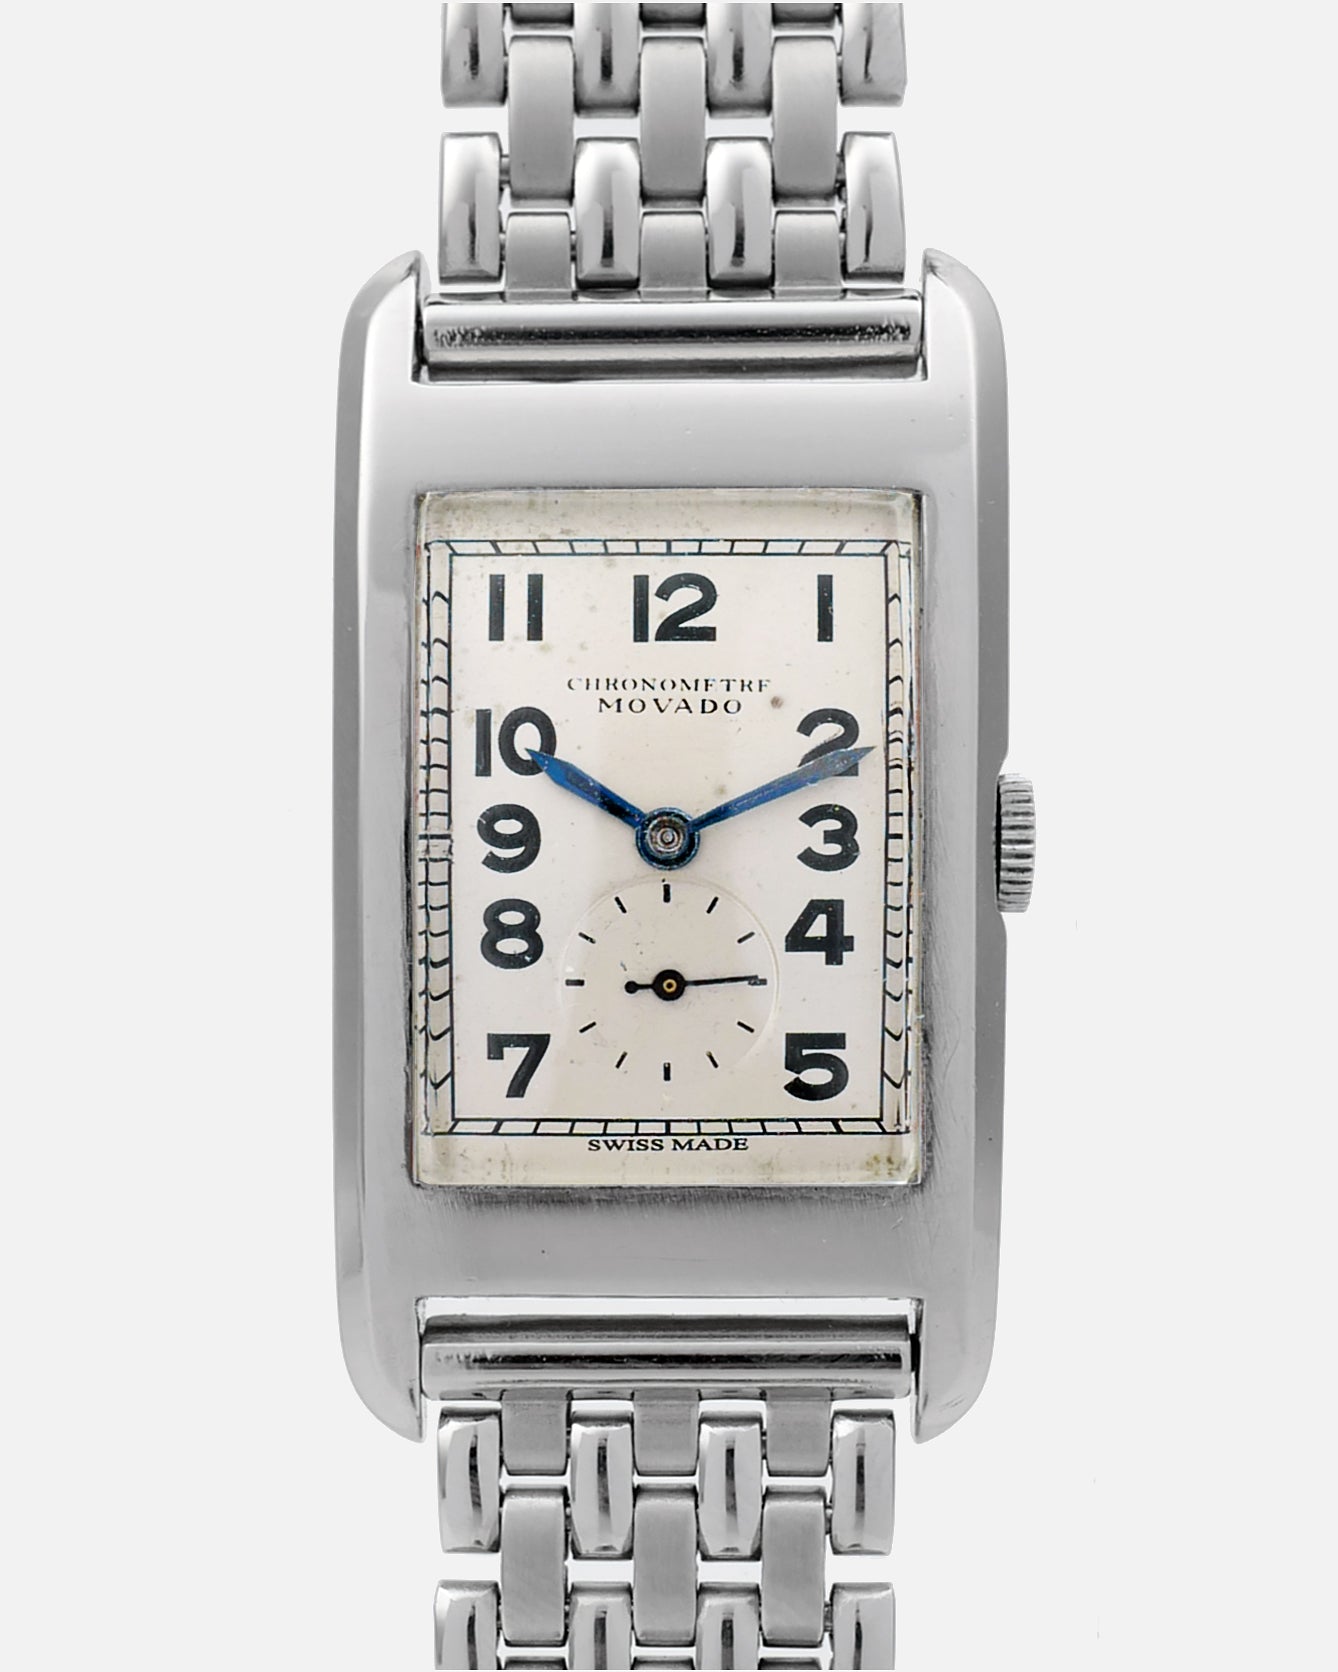 1930s Movado Chronometre Curviplan | Ref. 11819 | Cal. 510 |